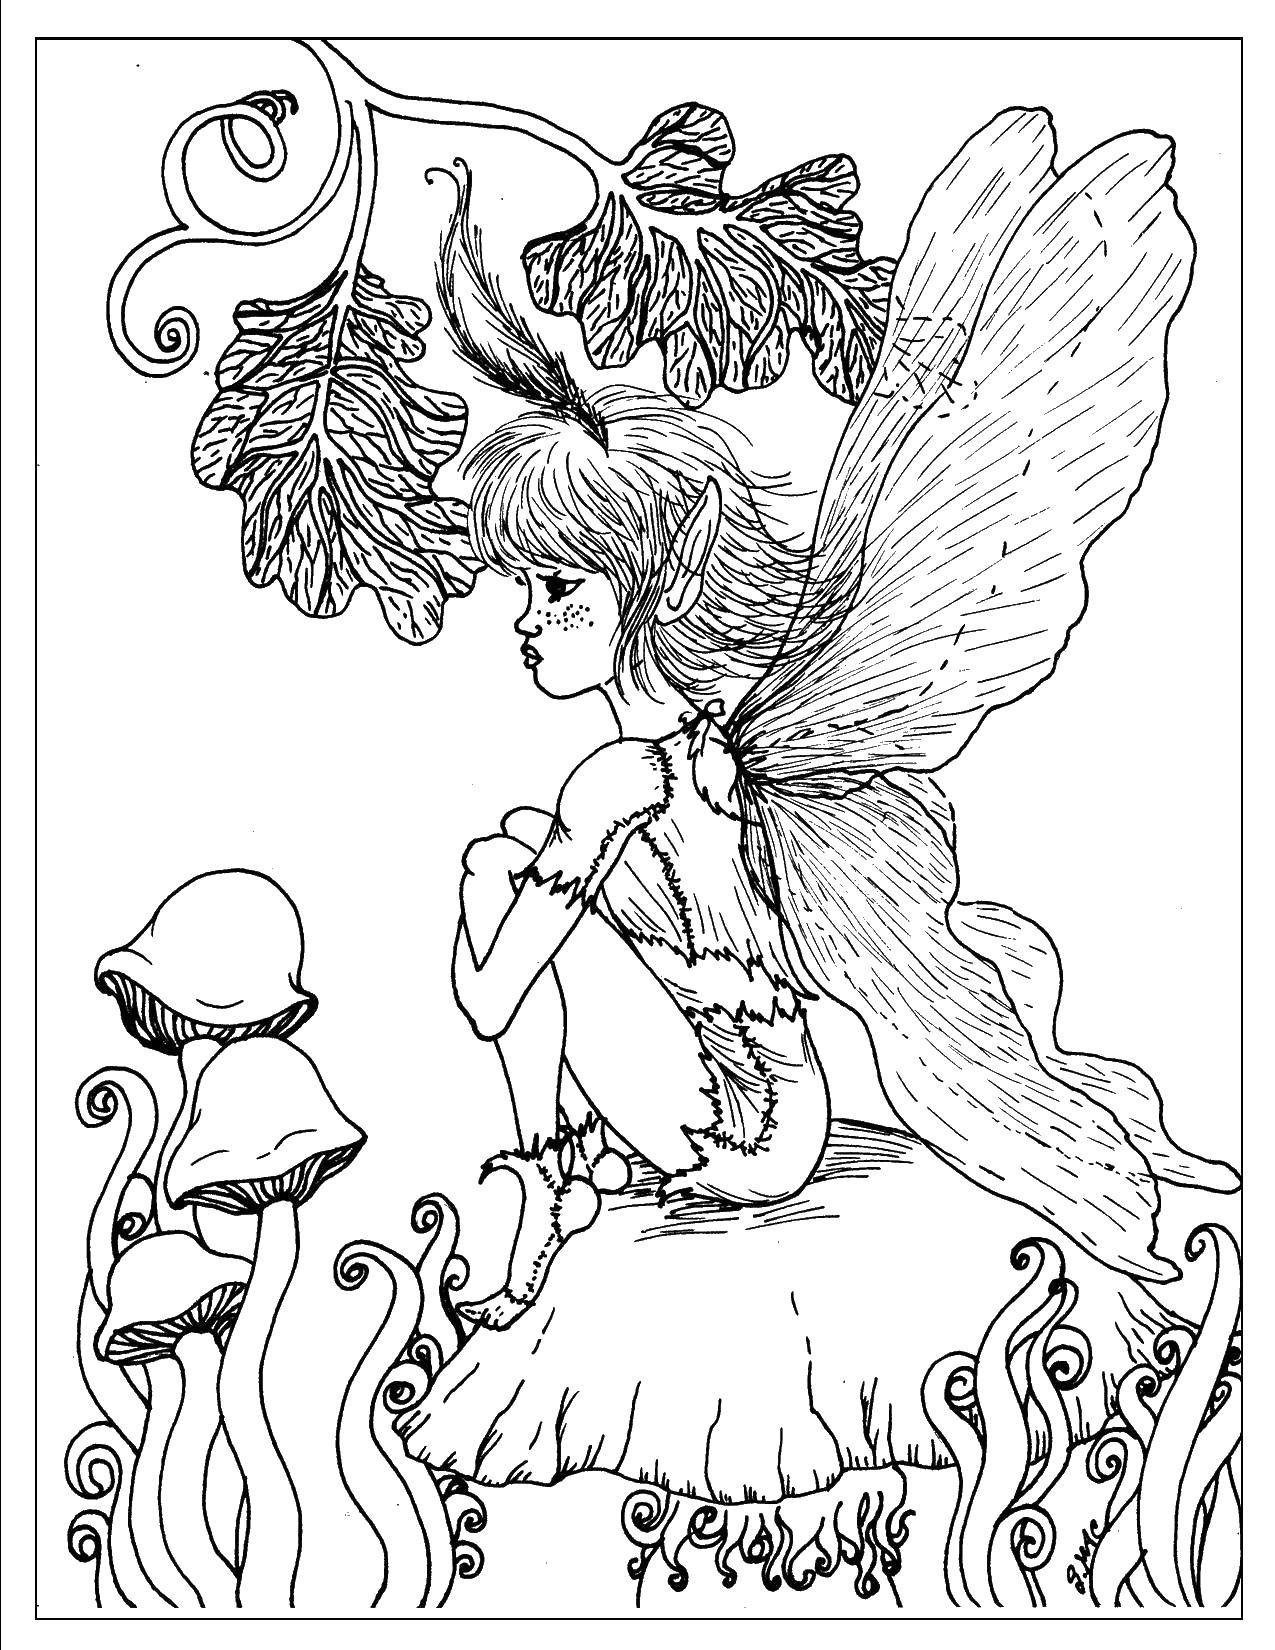 Coloring Sad fairy. Category Fantasy. Tags:  fantasy, fairies, plants.